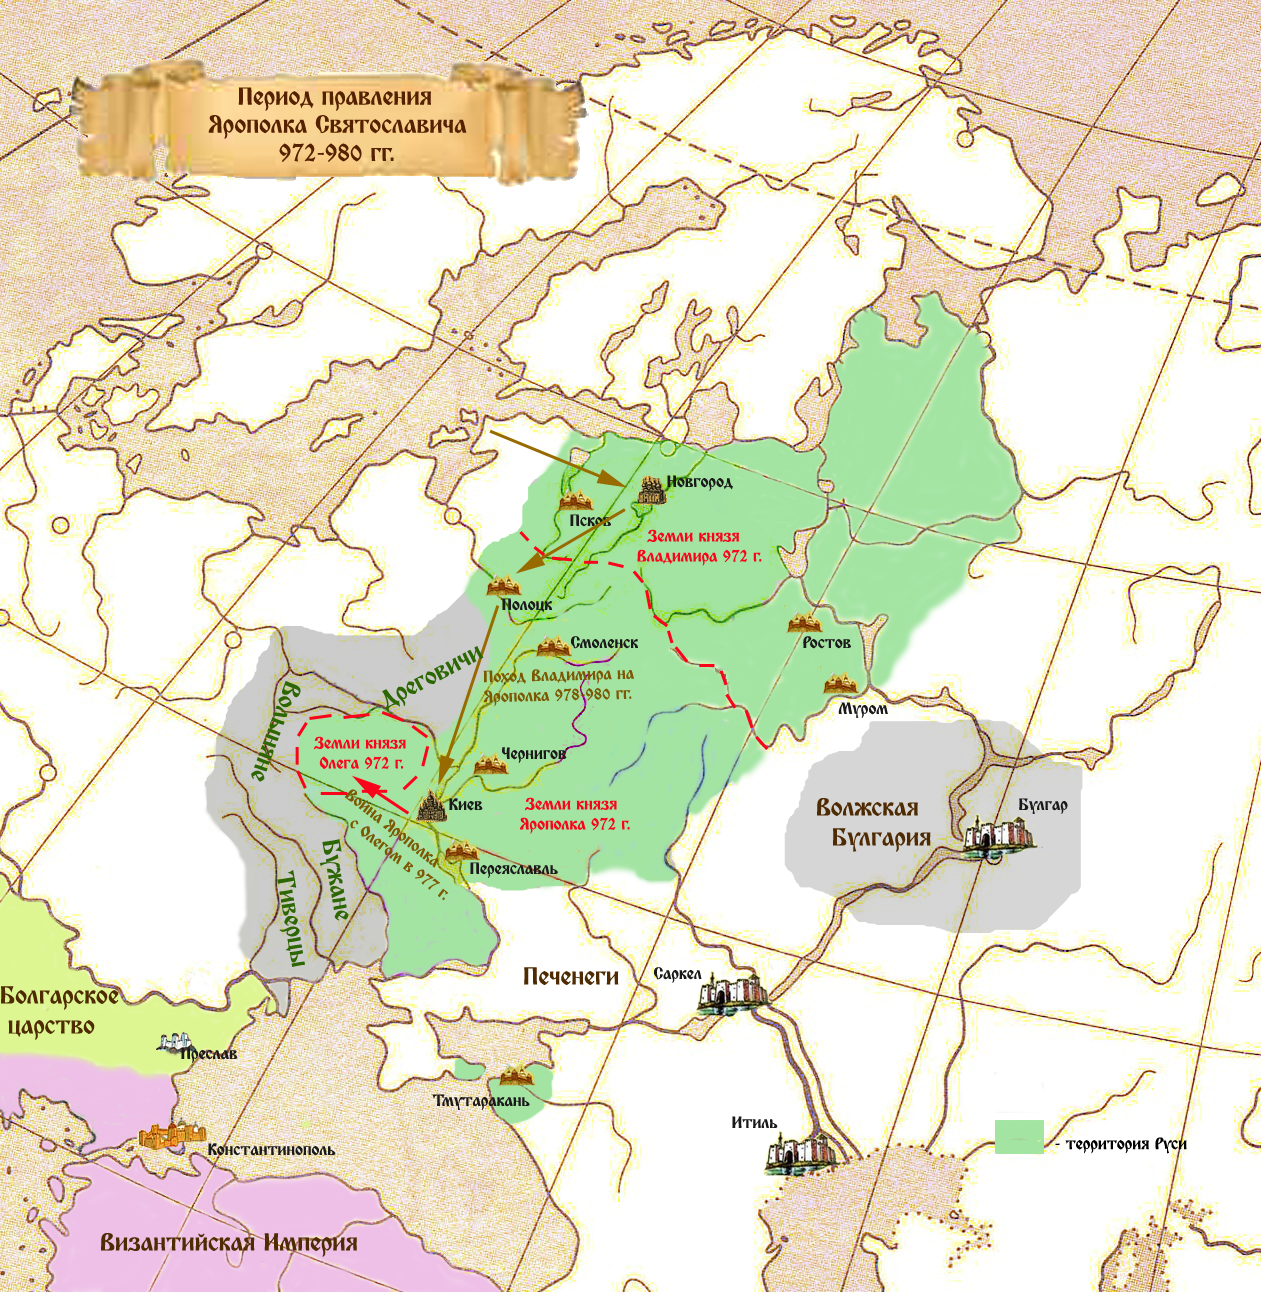 Русские земли в период правления Ярополка Святославича